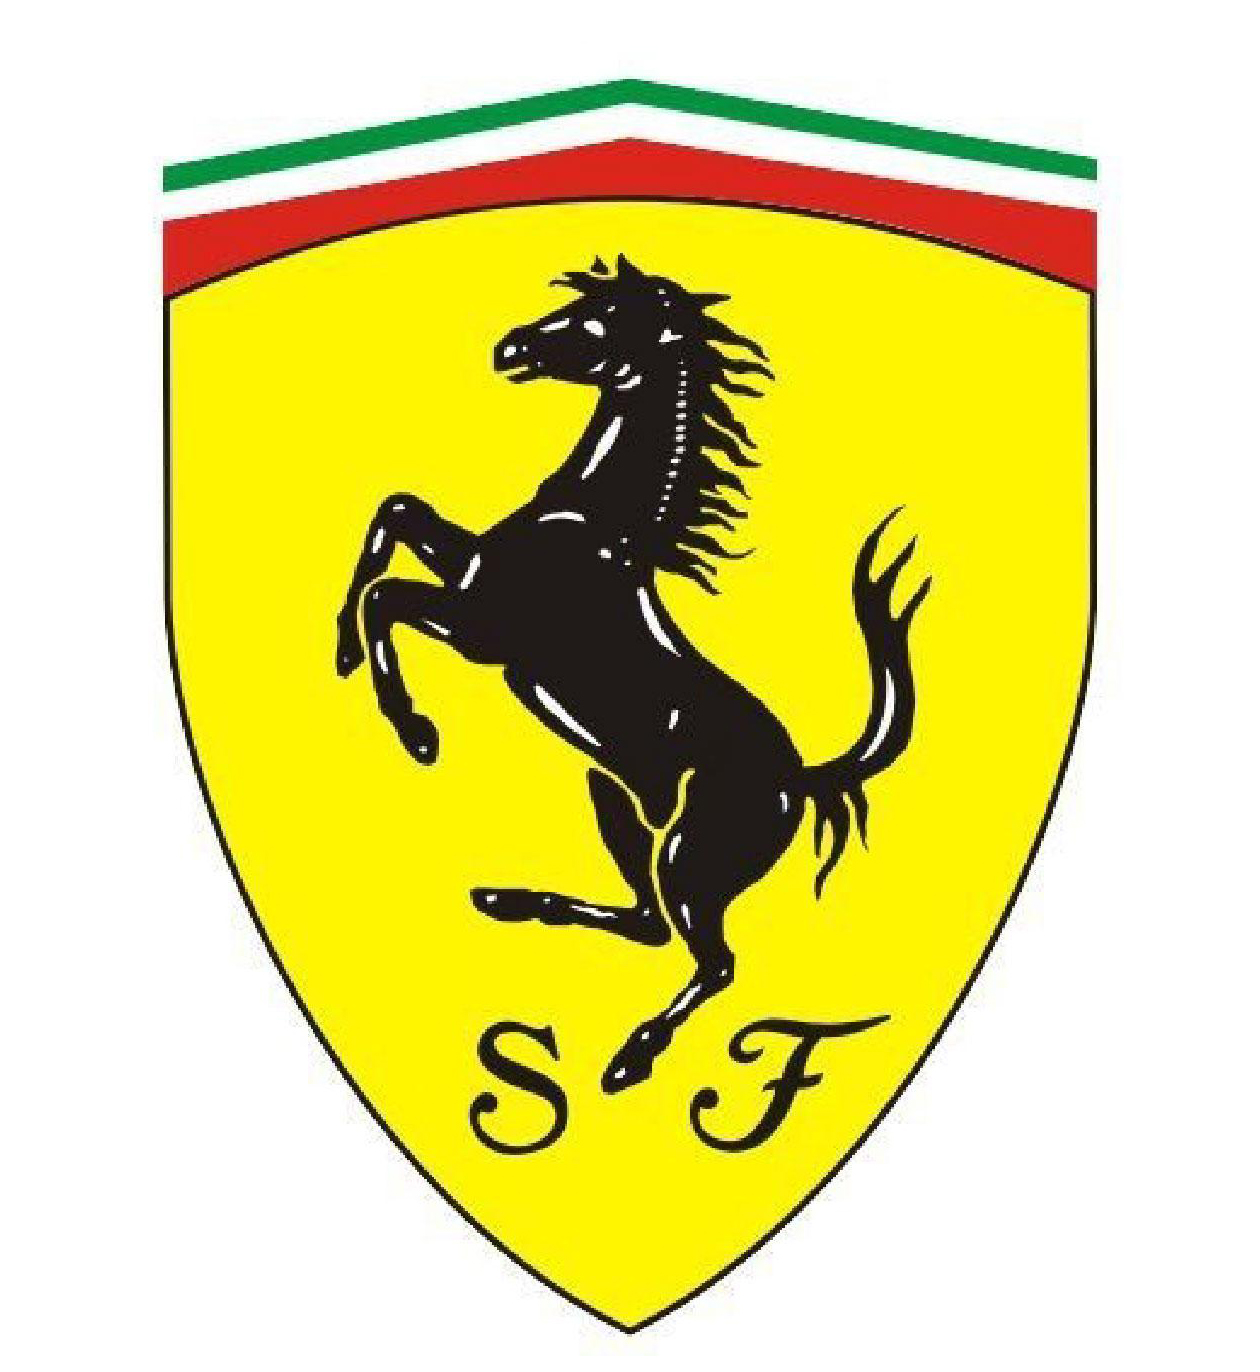 Buy Original Ferrari Products At Best Price in Tanzania